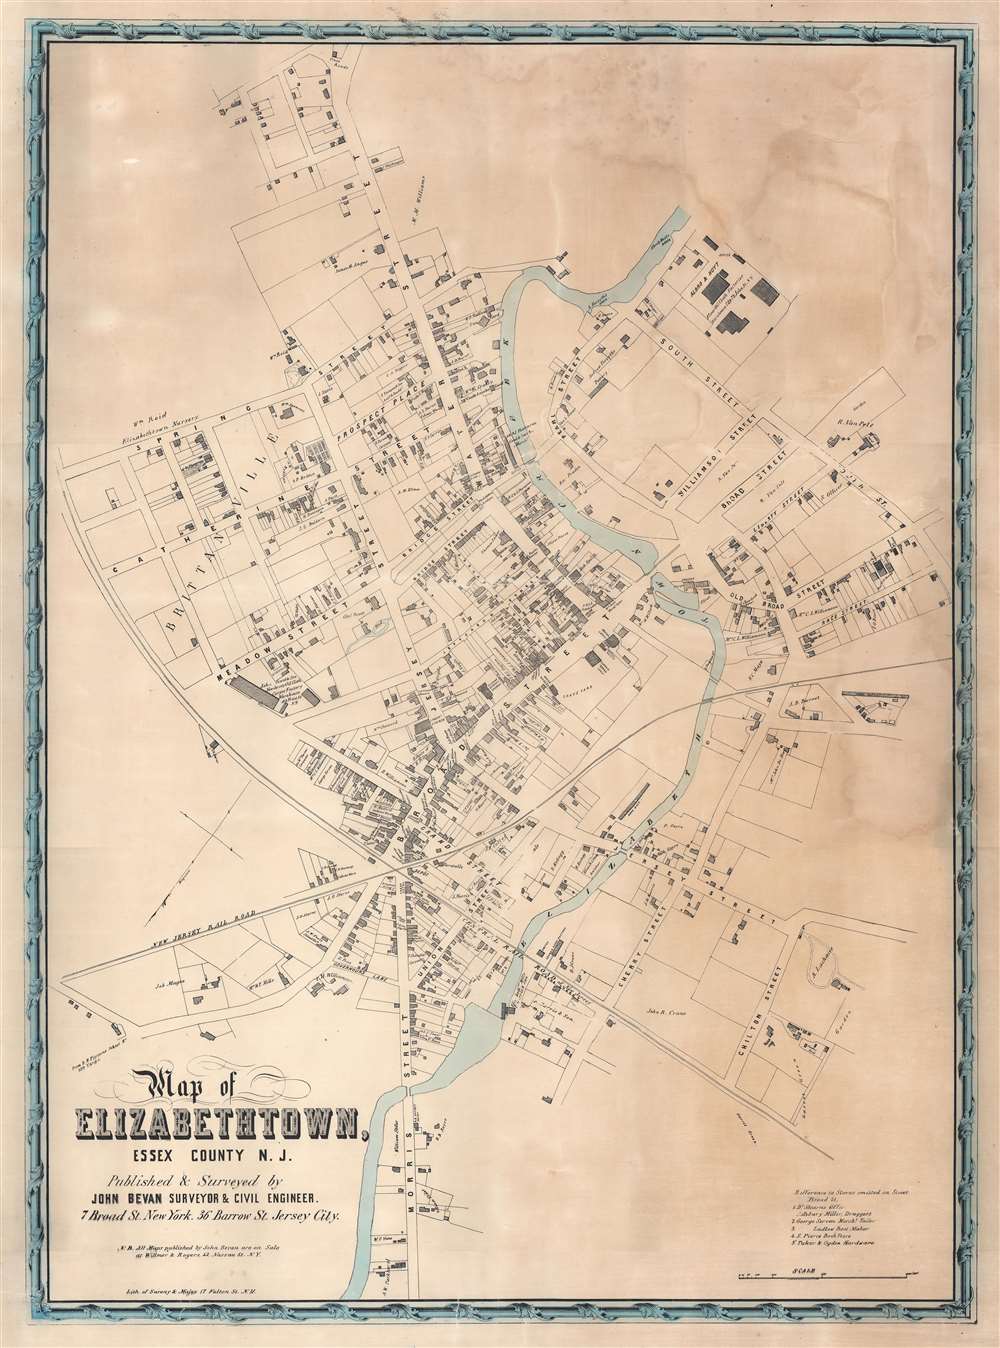 Map of Elizabethtown, Essex County N.J. - Main View